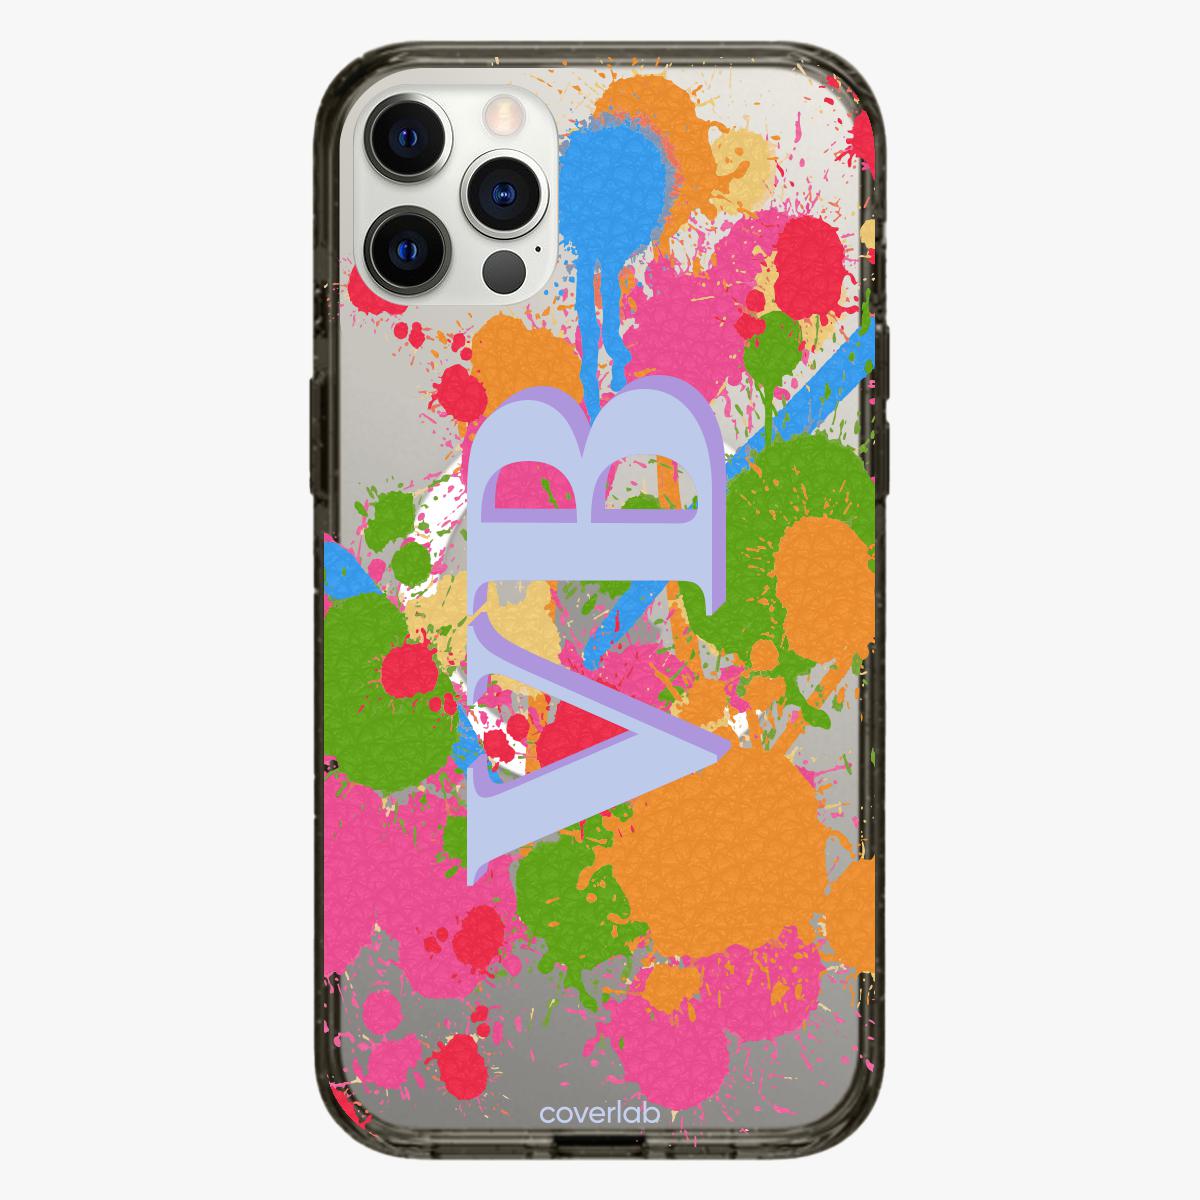 غطاء MagSafe iPhone بتصميم Paint مخصص